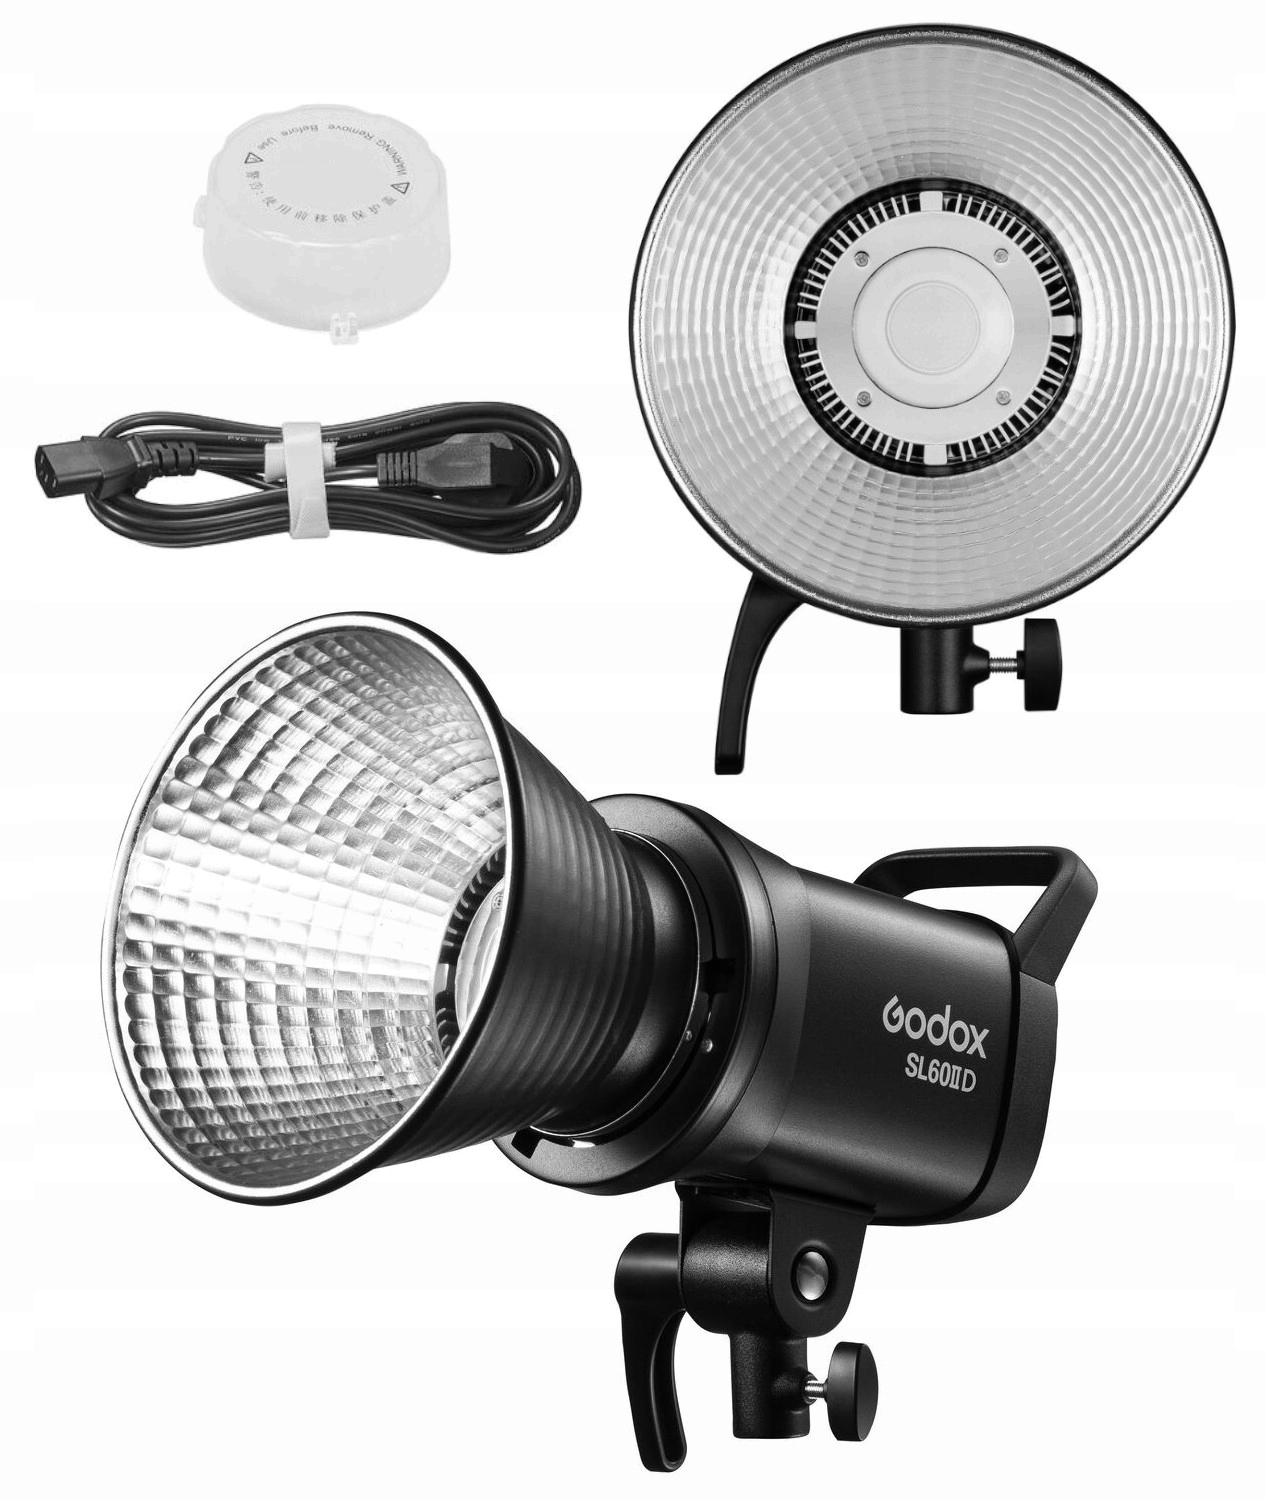 Godox SL-60W SL60W LED Video Light (Daylight-Balanced)